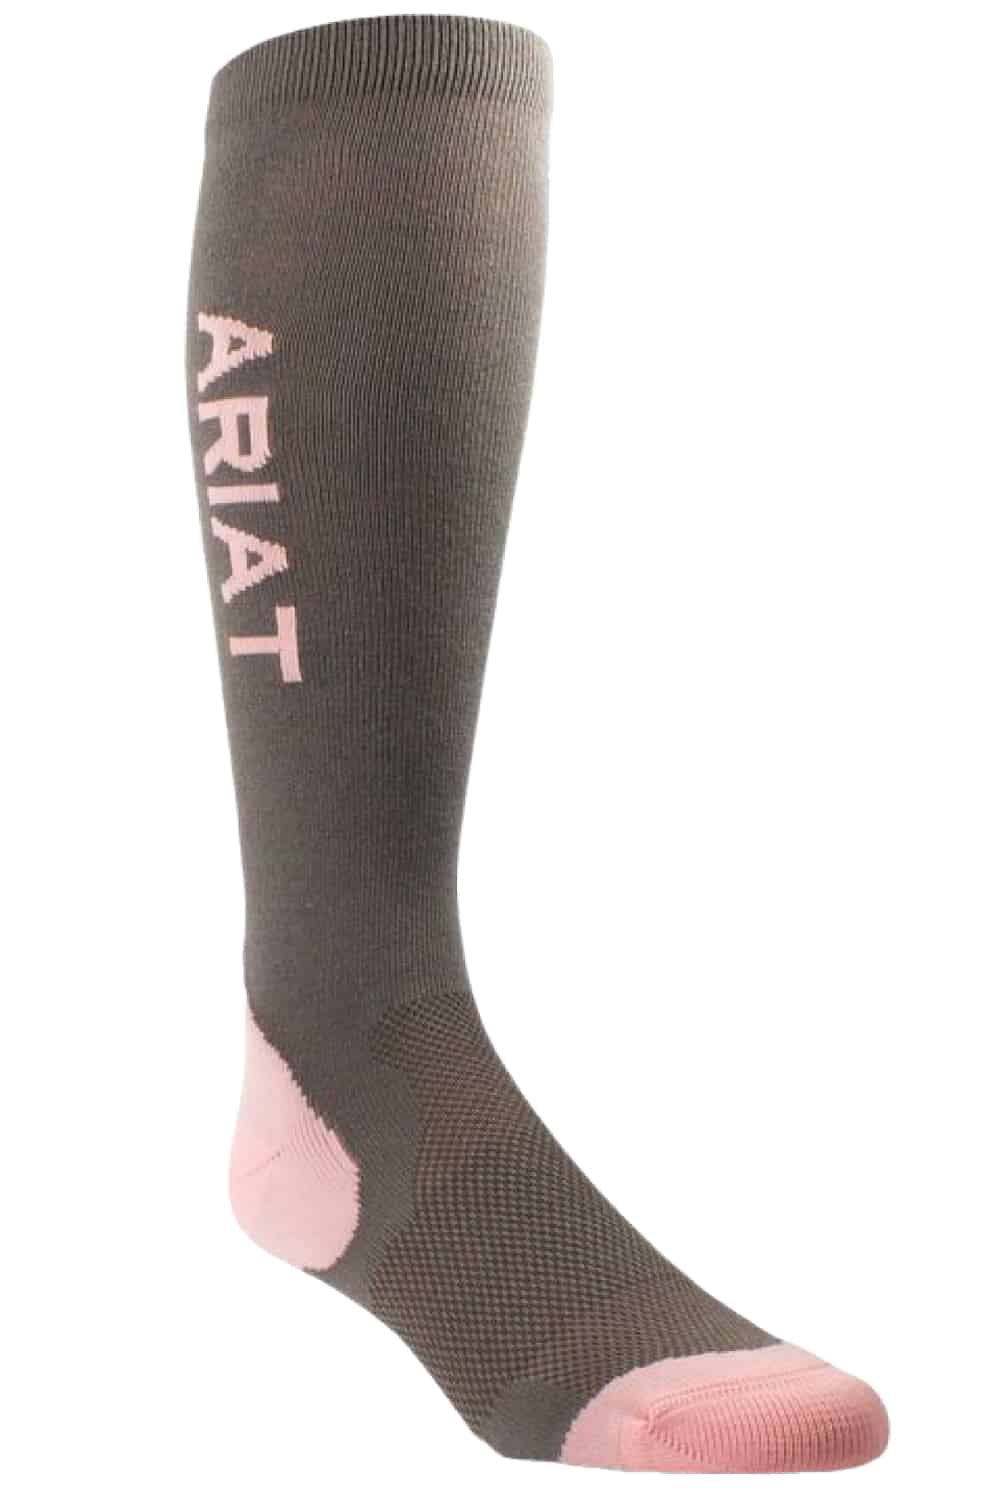 AriatTEK Performance Socks in Iron/Quartz Pink 